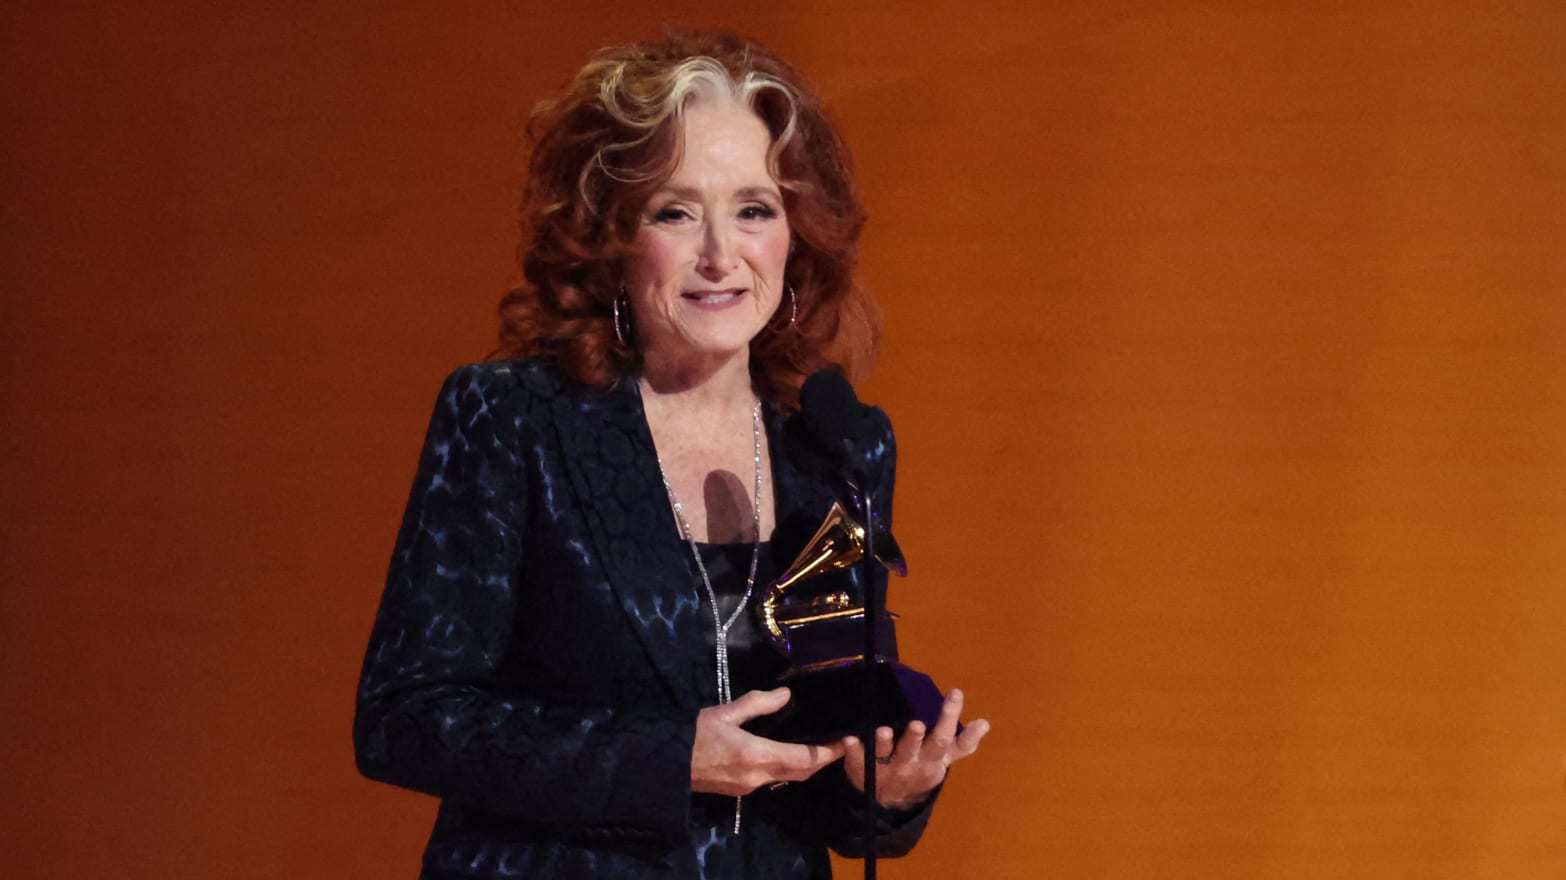 Bonny Raitt accepts the Grammy award for Song of the Year